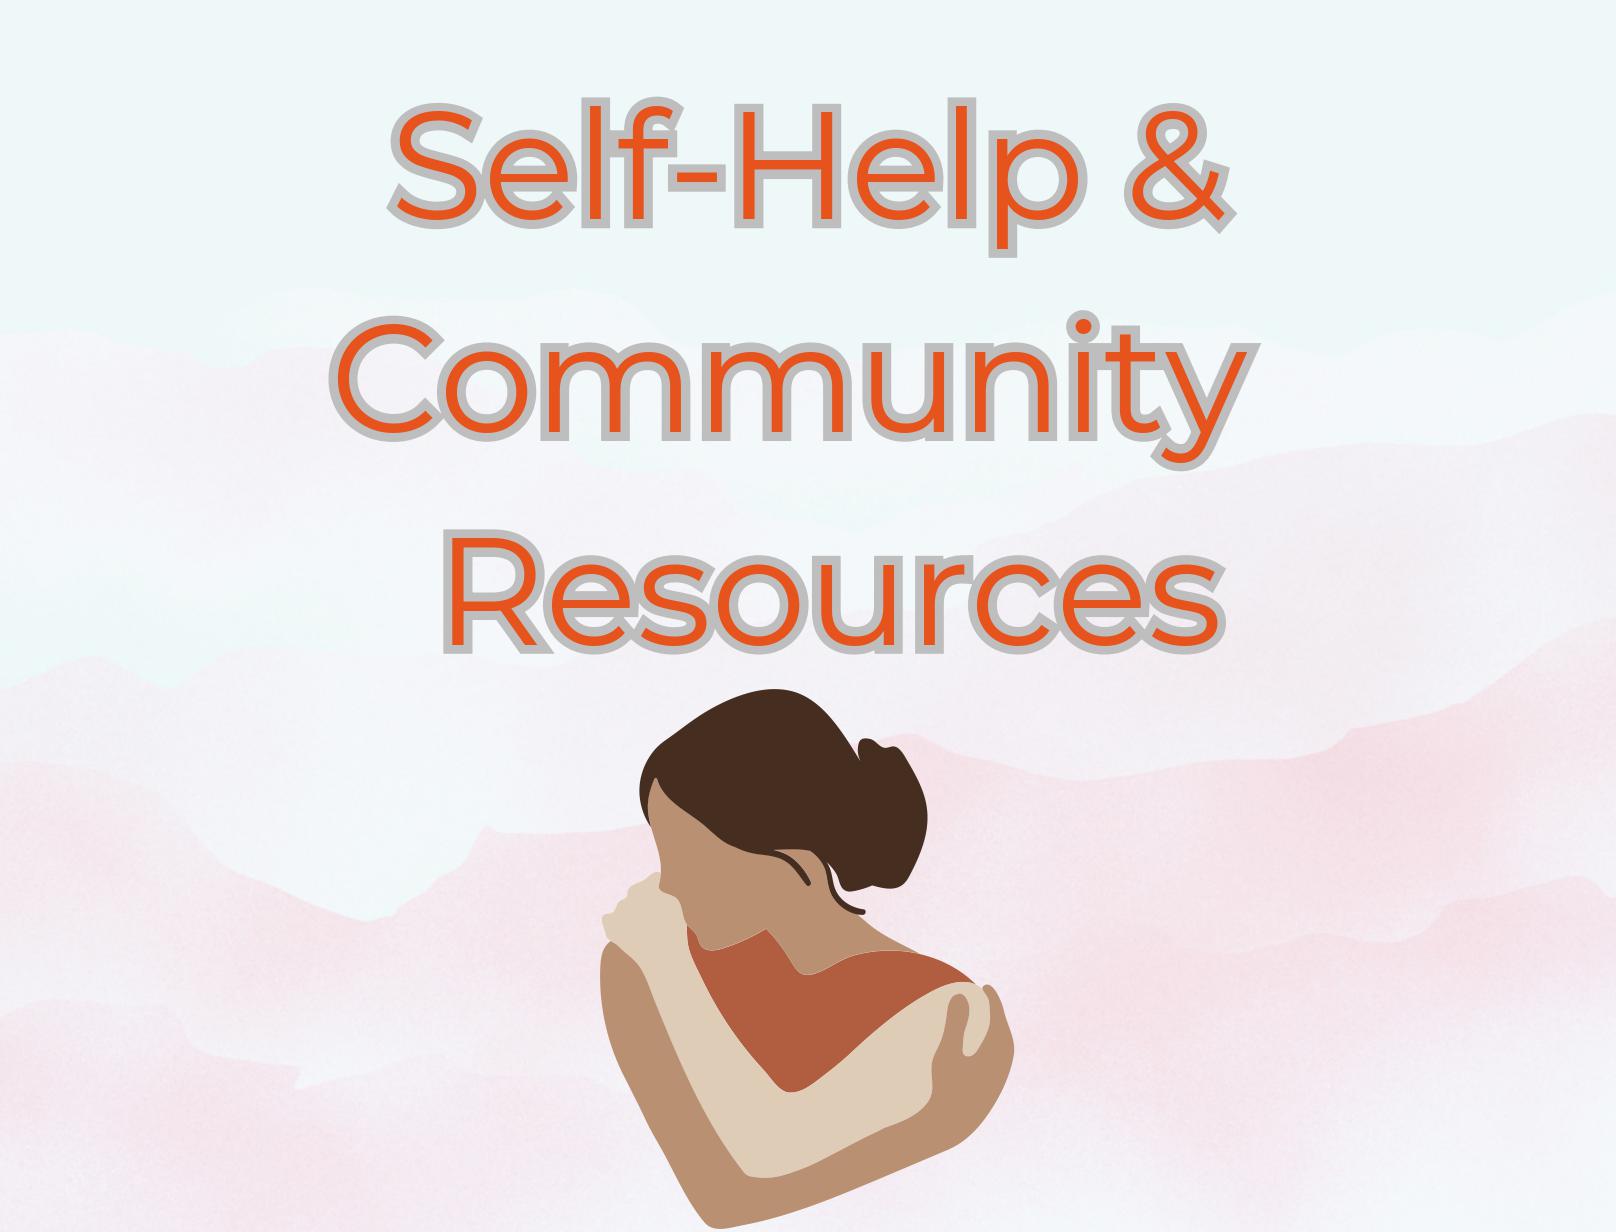 Self-help & community resources